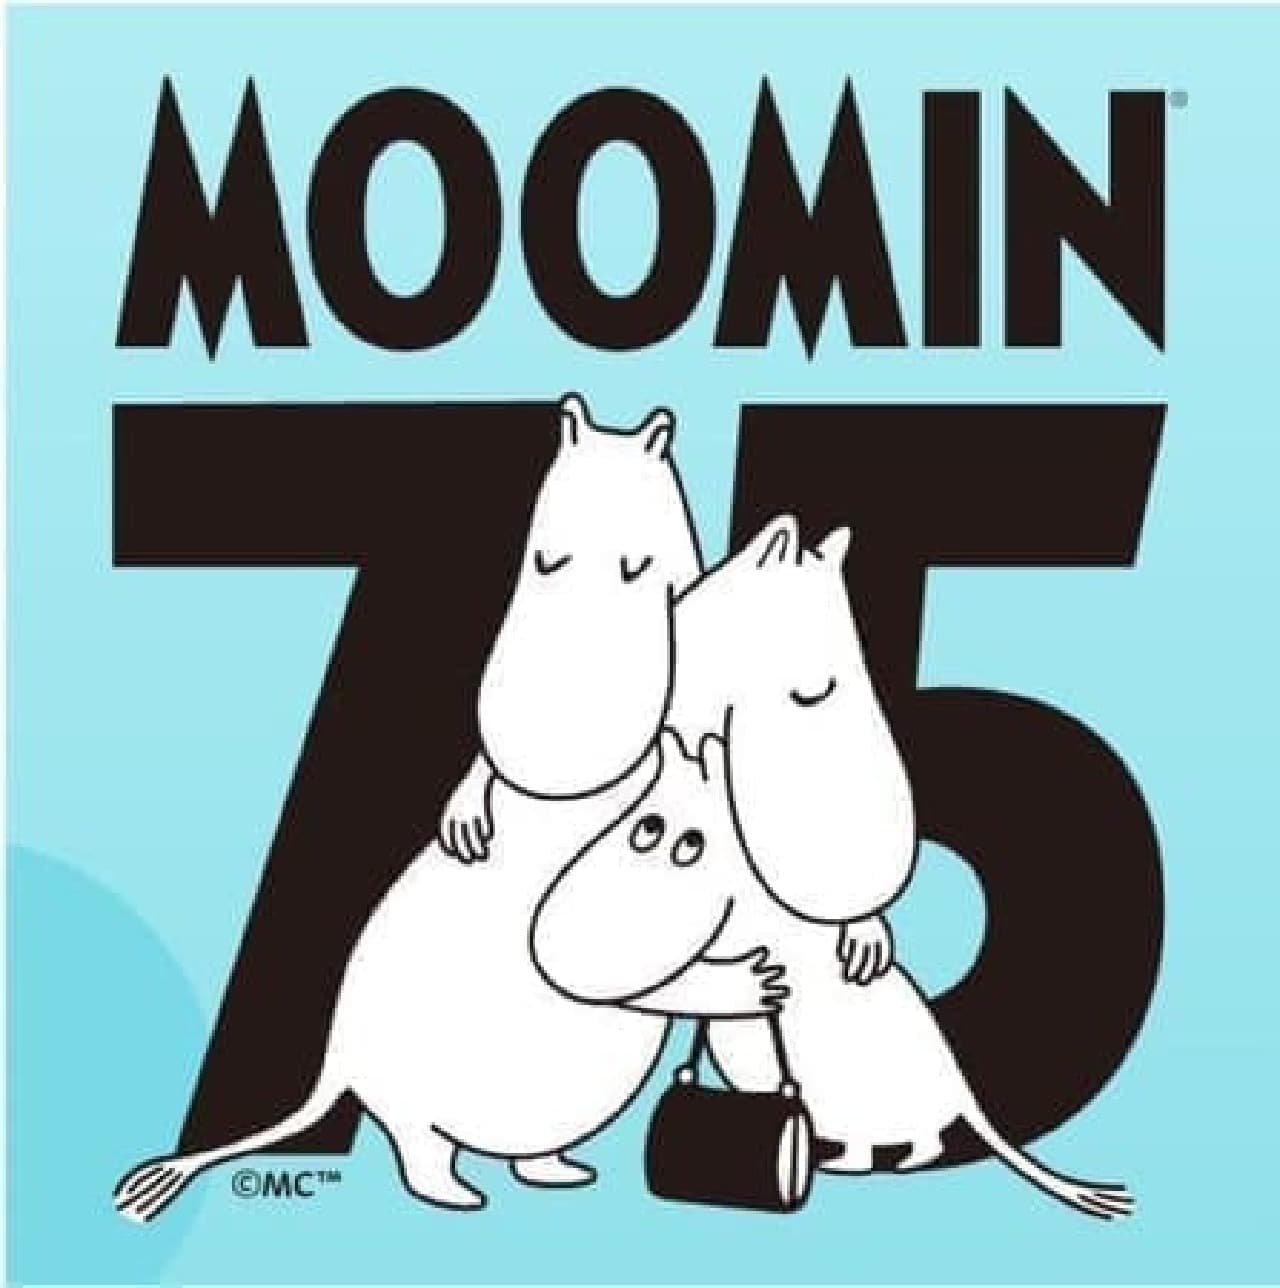 Regica Goruk too! A full lineup of "Felissimo" original Moomin goods